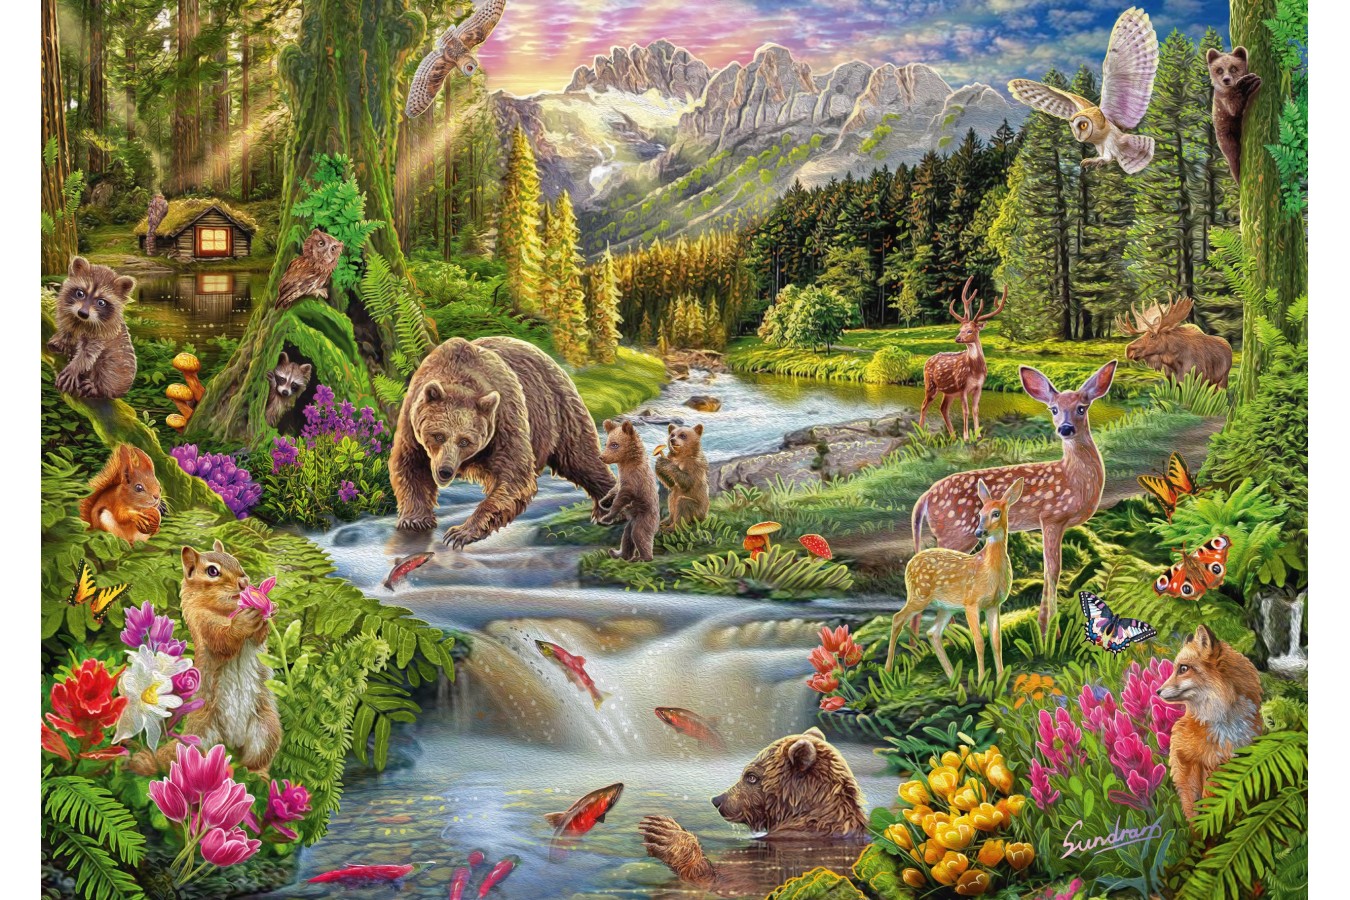 Puzzle 1000 piese Schmidt - Steve Sundram: Forest Animals (Schmidt-59964)